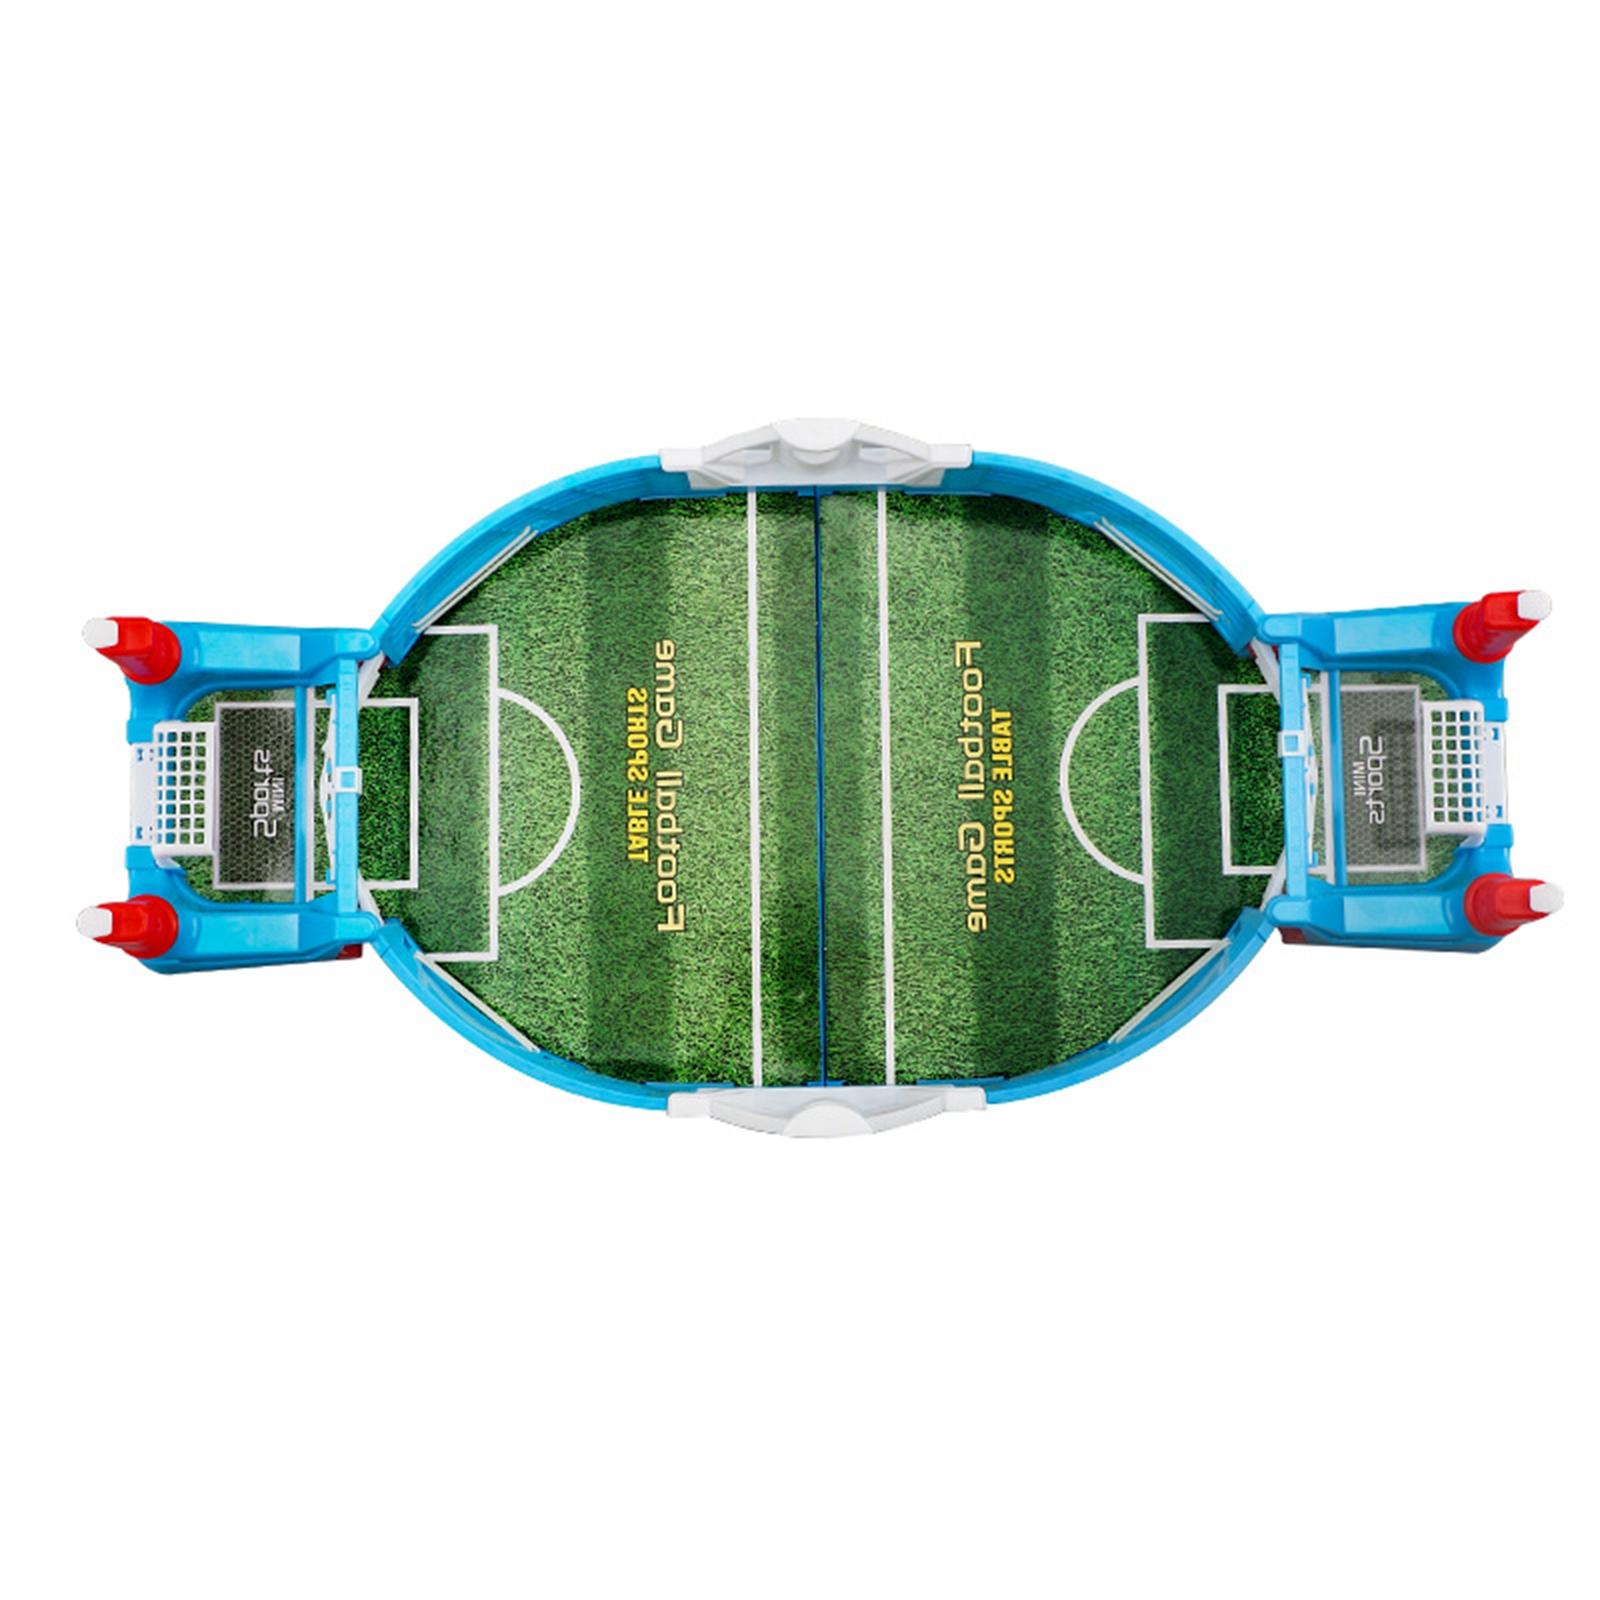 Desktop Football Board Games Kit Indoor Toy Sports for Adults Kids 57cmx27cm 6 Balls